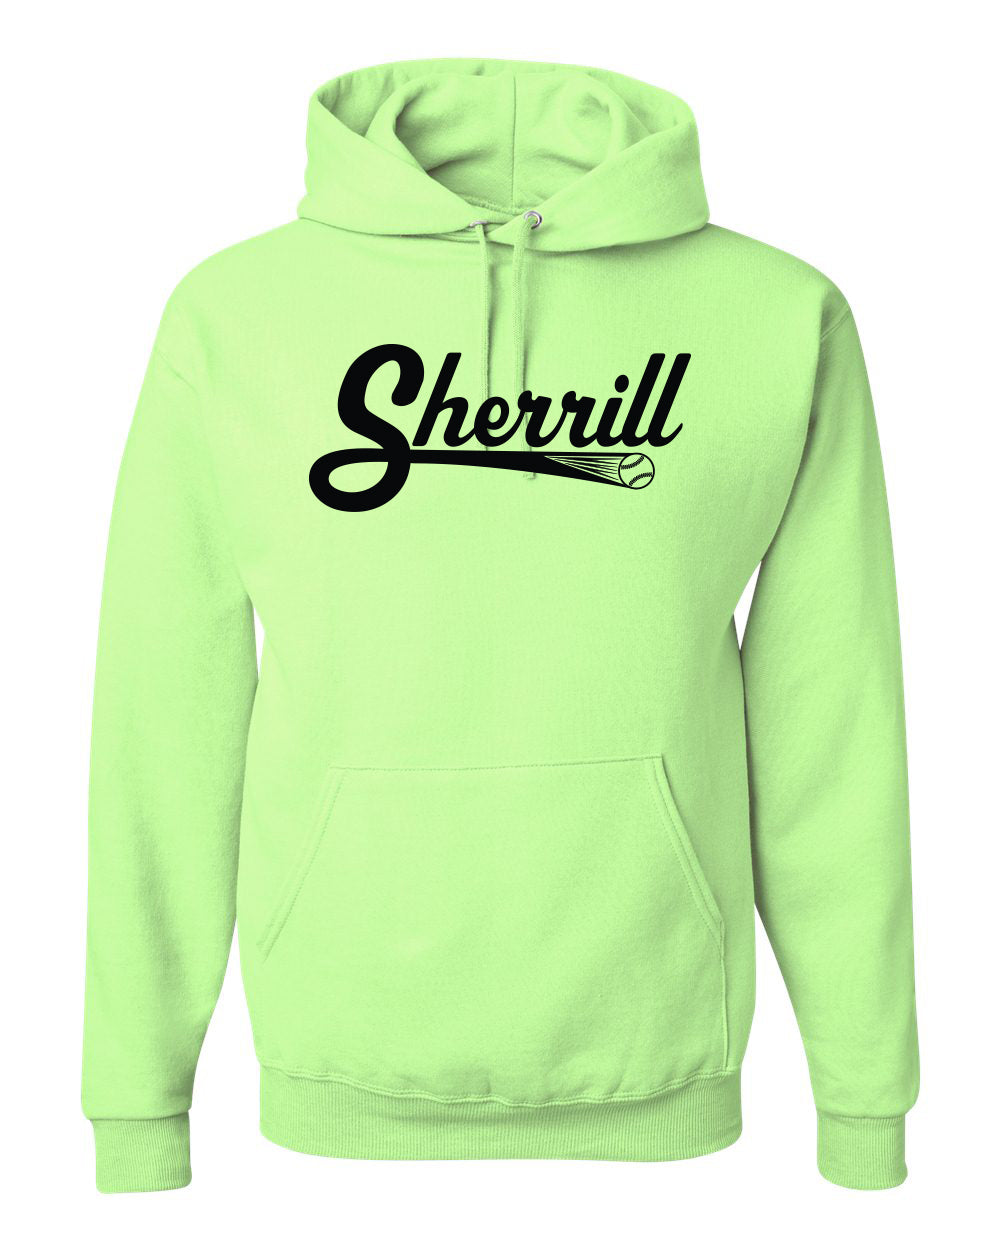 996M- SHERRILL ADULT Hooded Sweatshirt